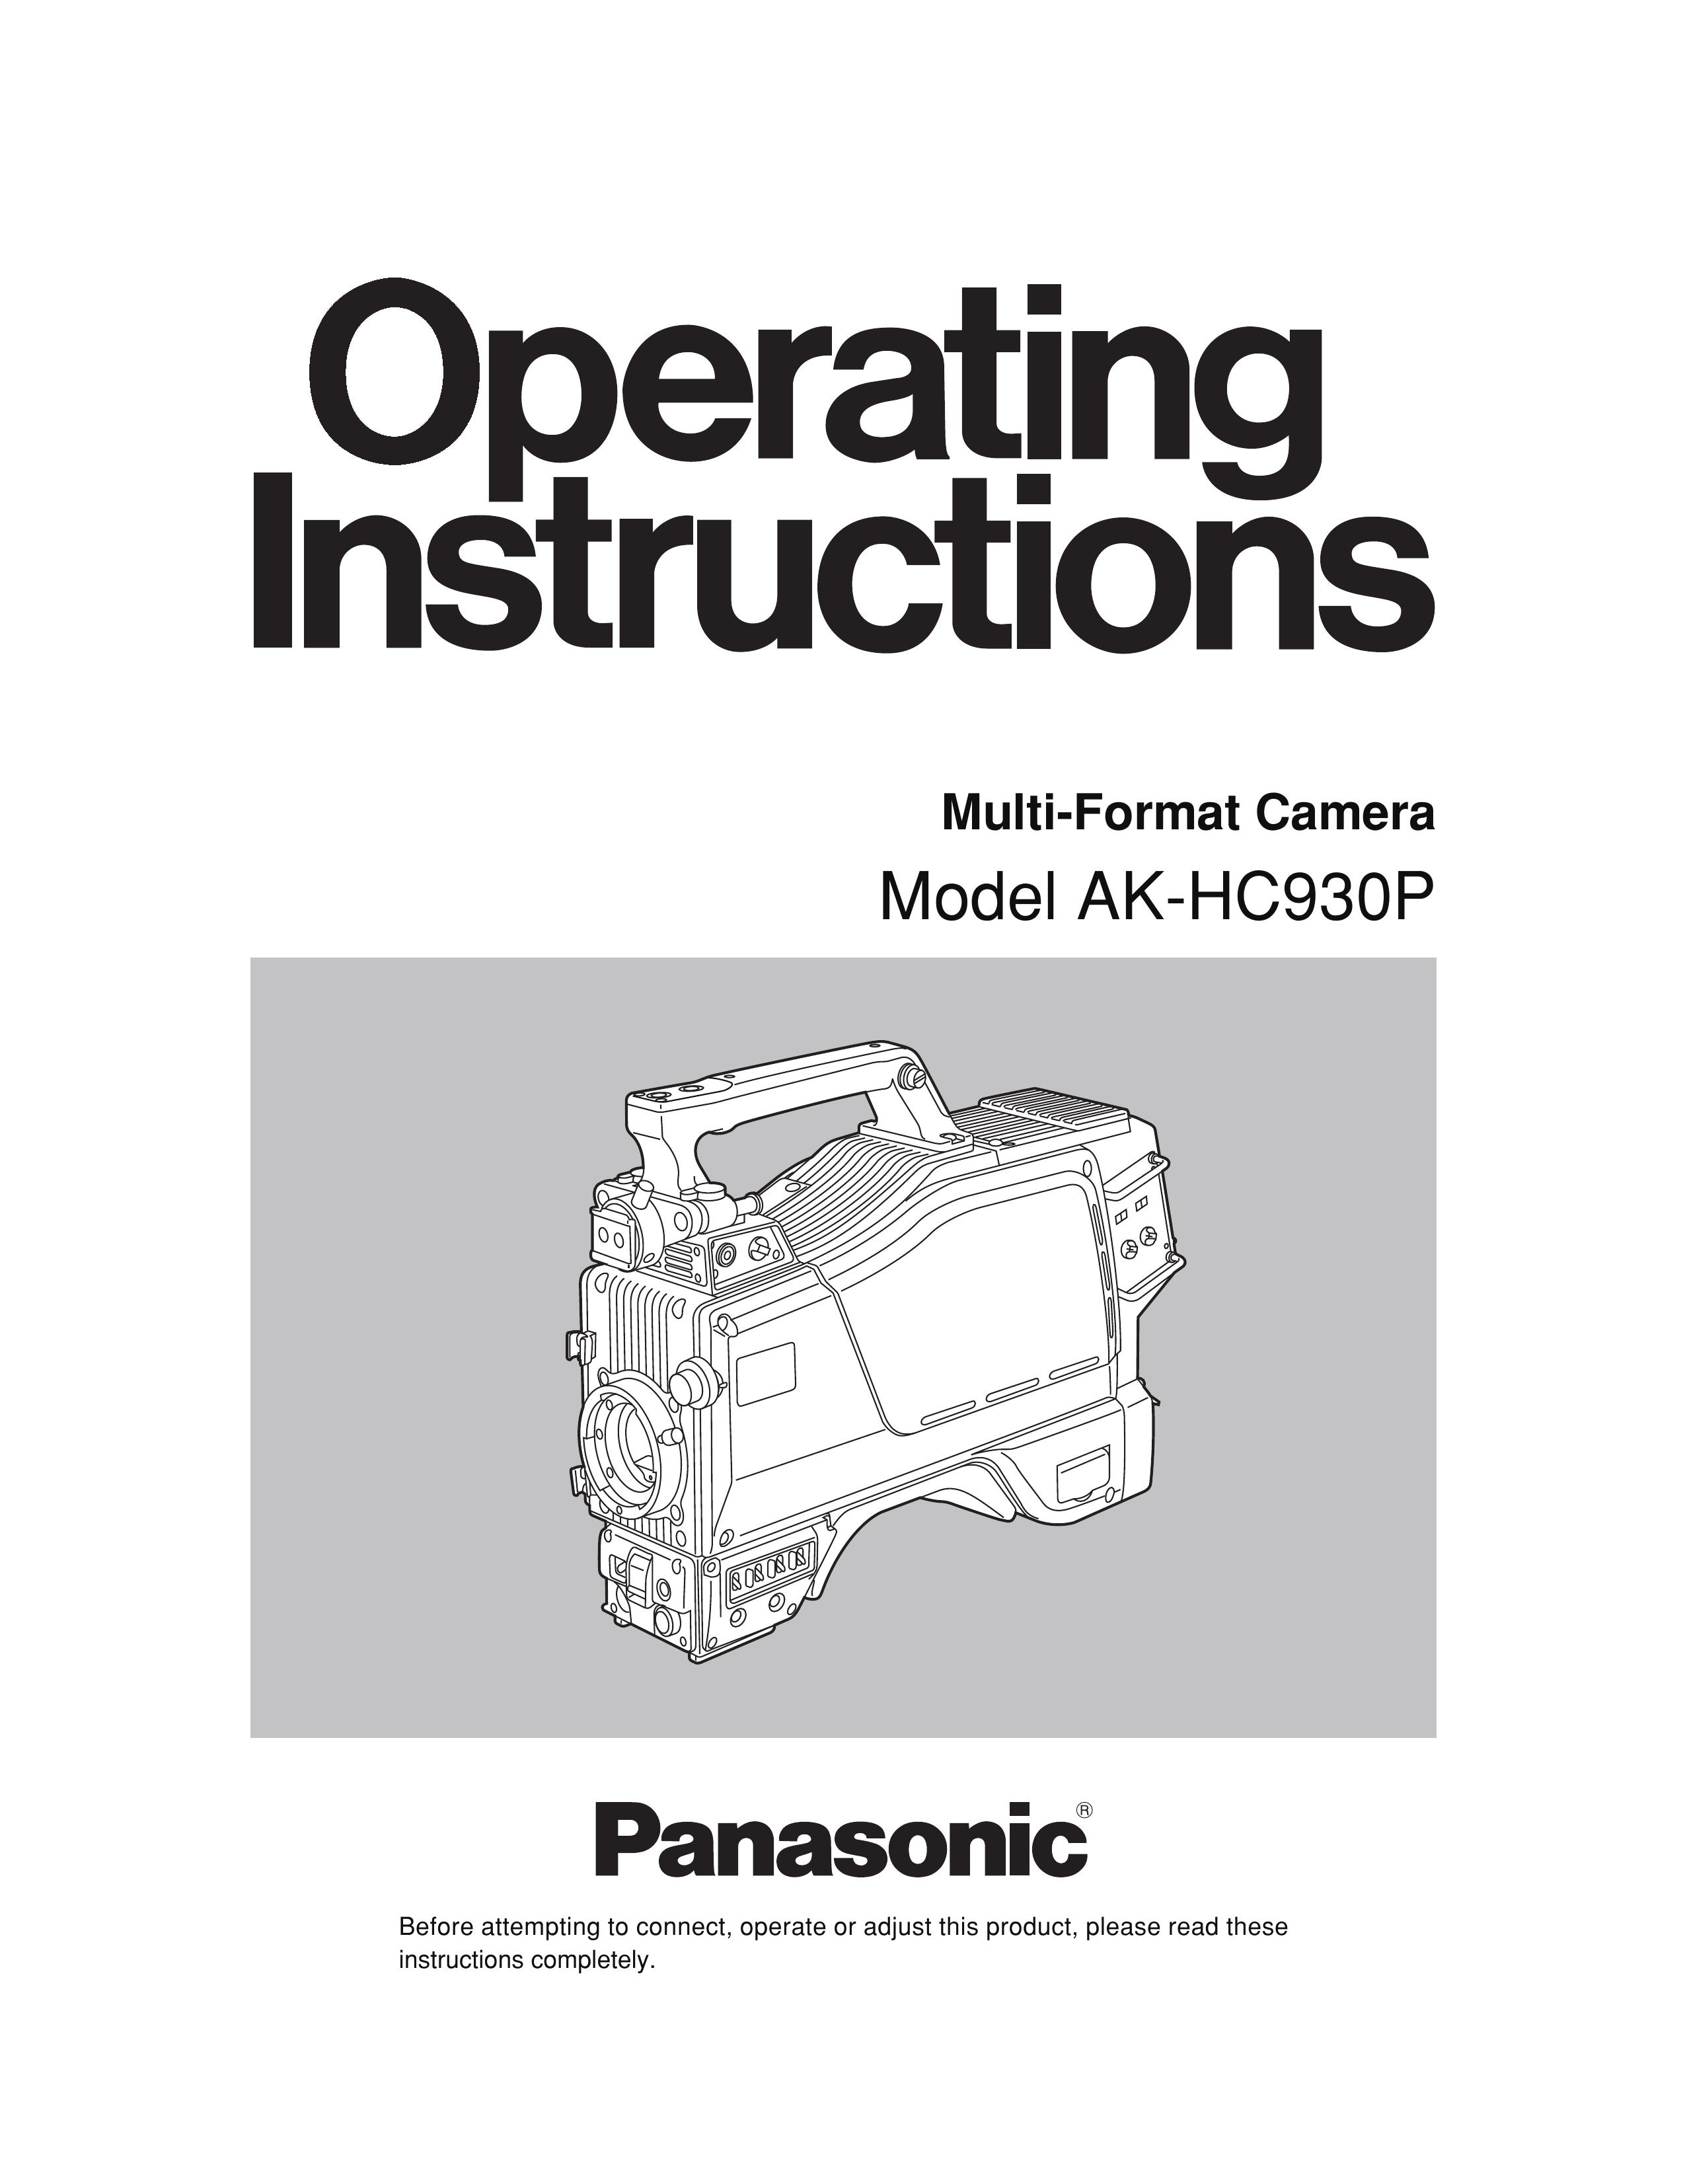 Panasonic AK-HC930P Digital Camera User Manual